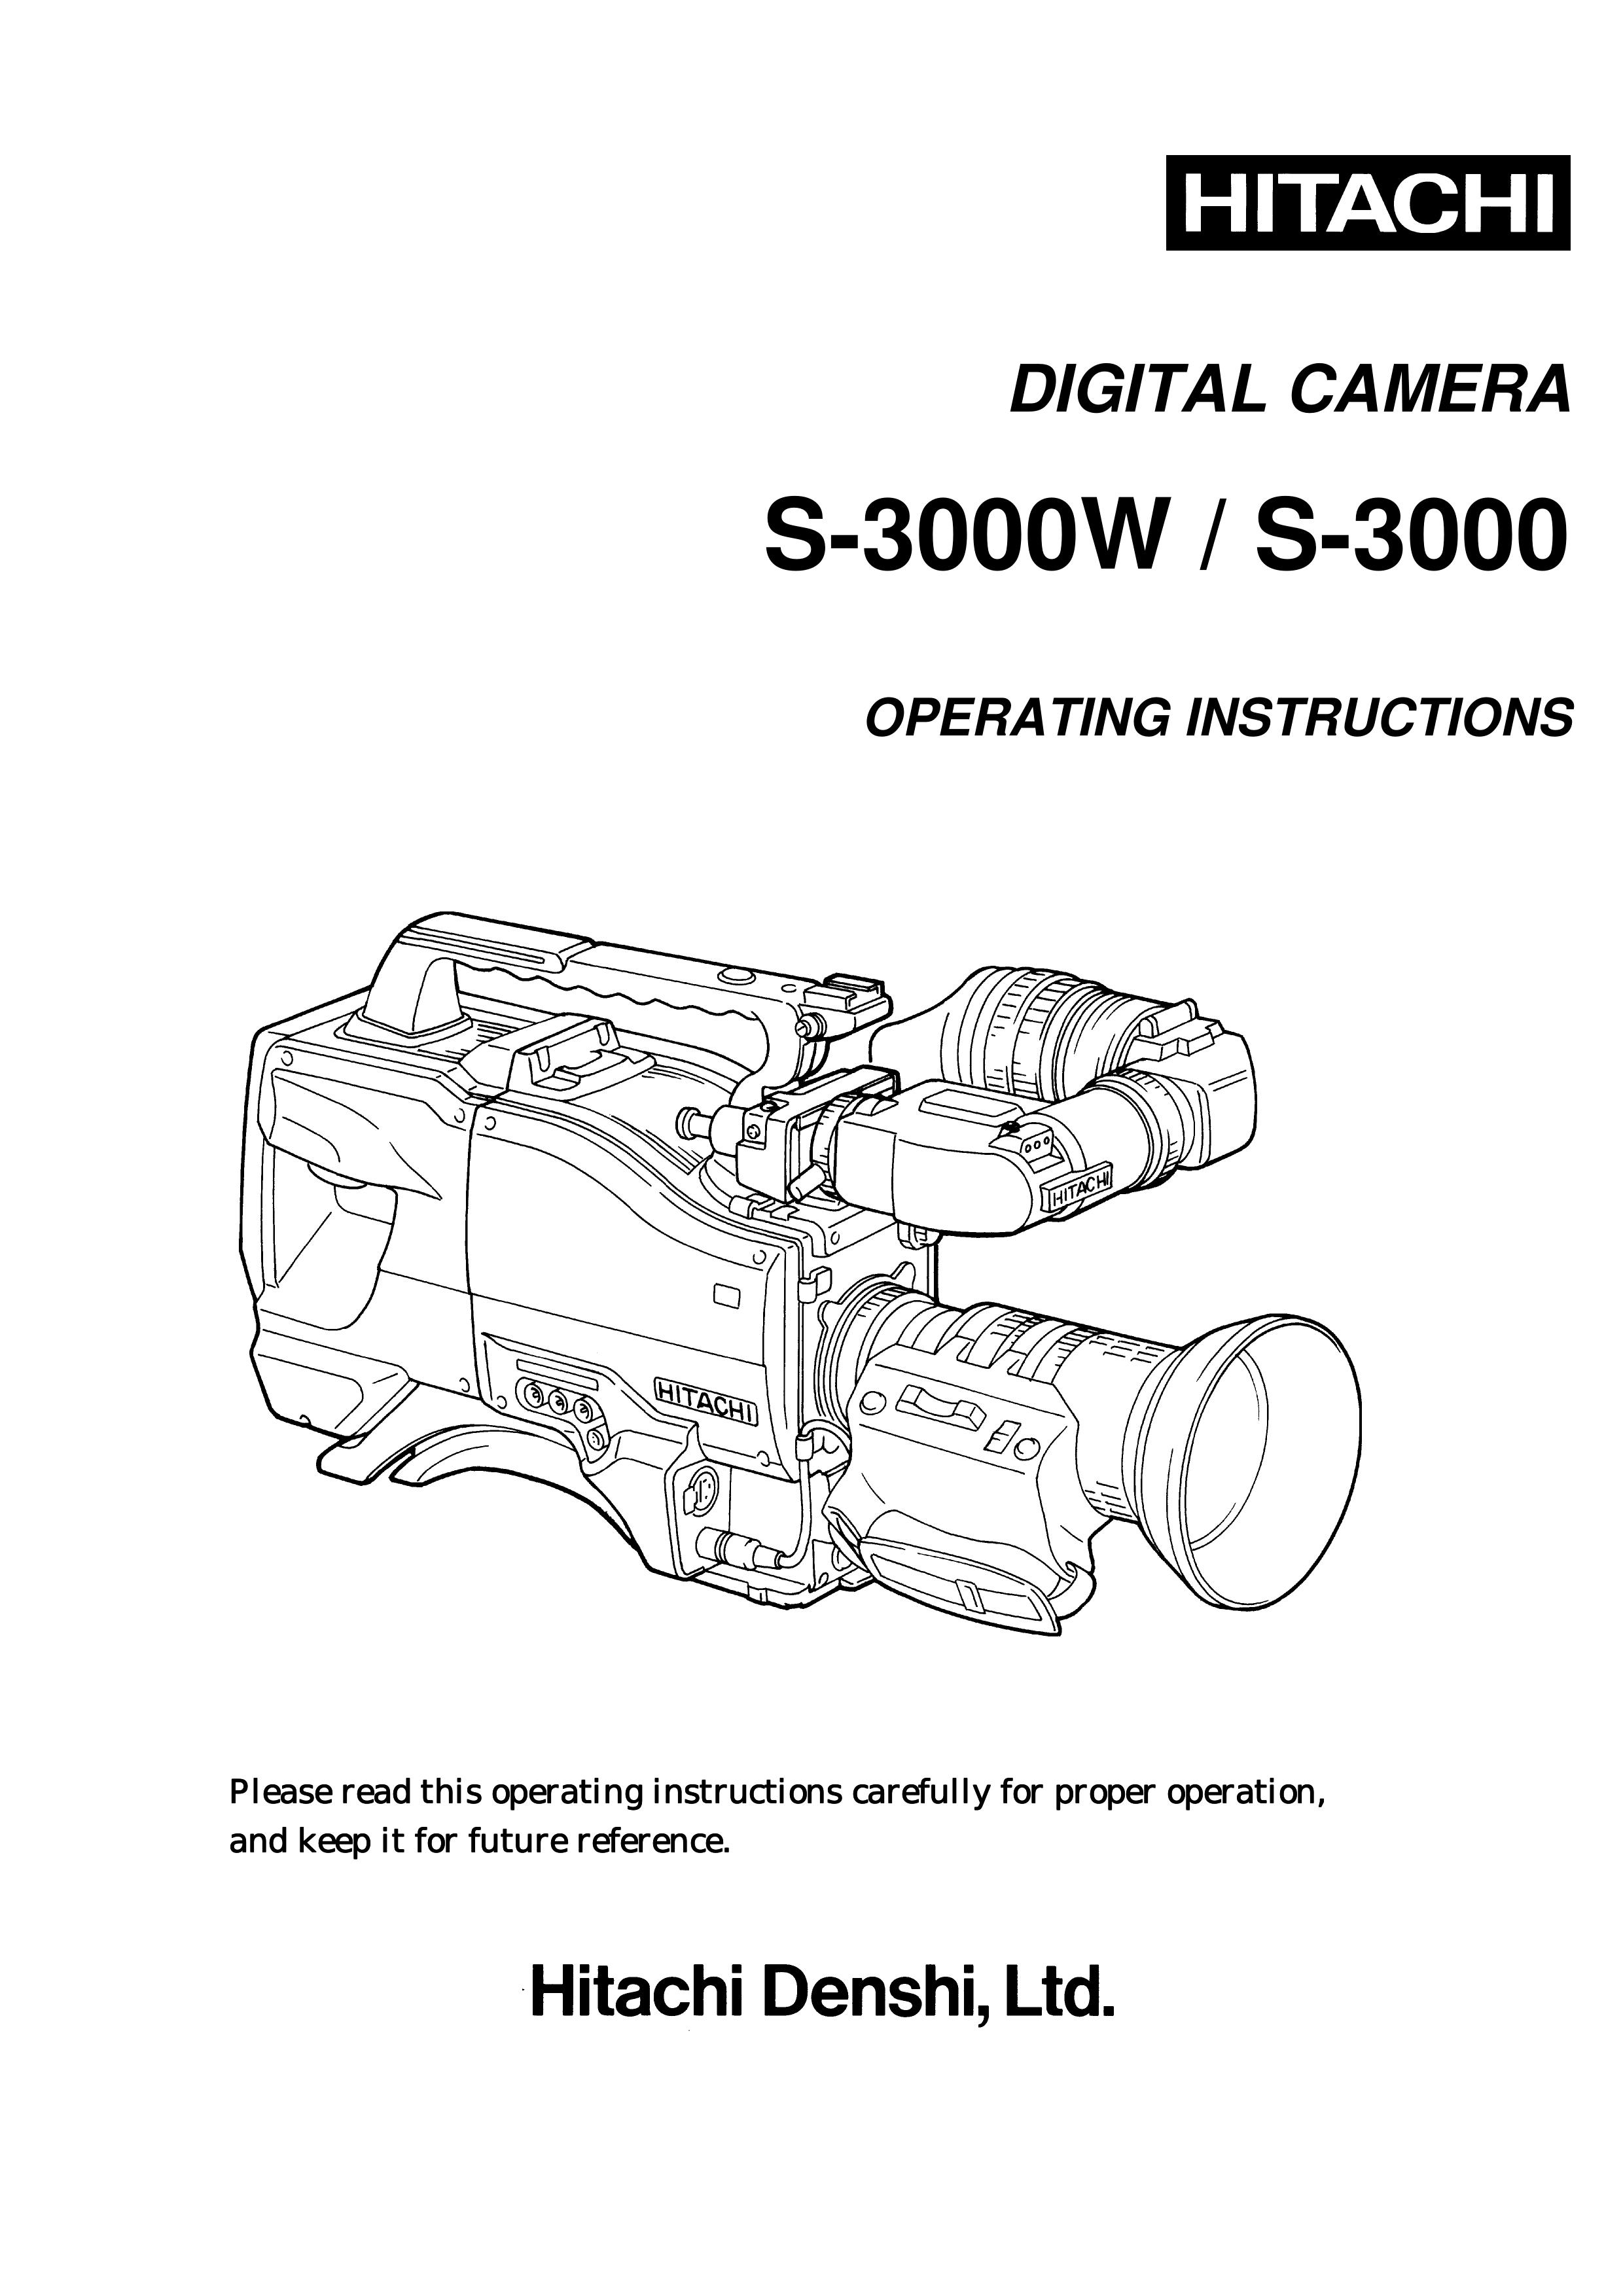 Indesit S-3000W Camcorder User Manual